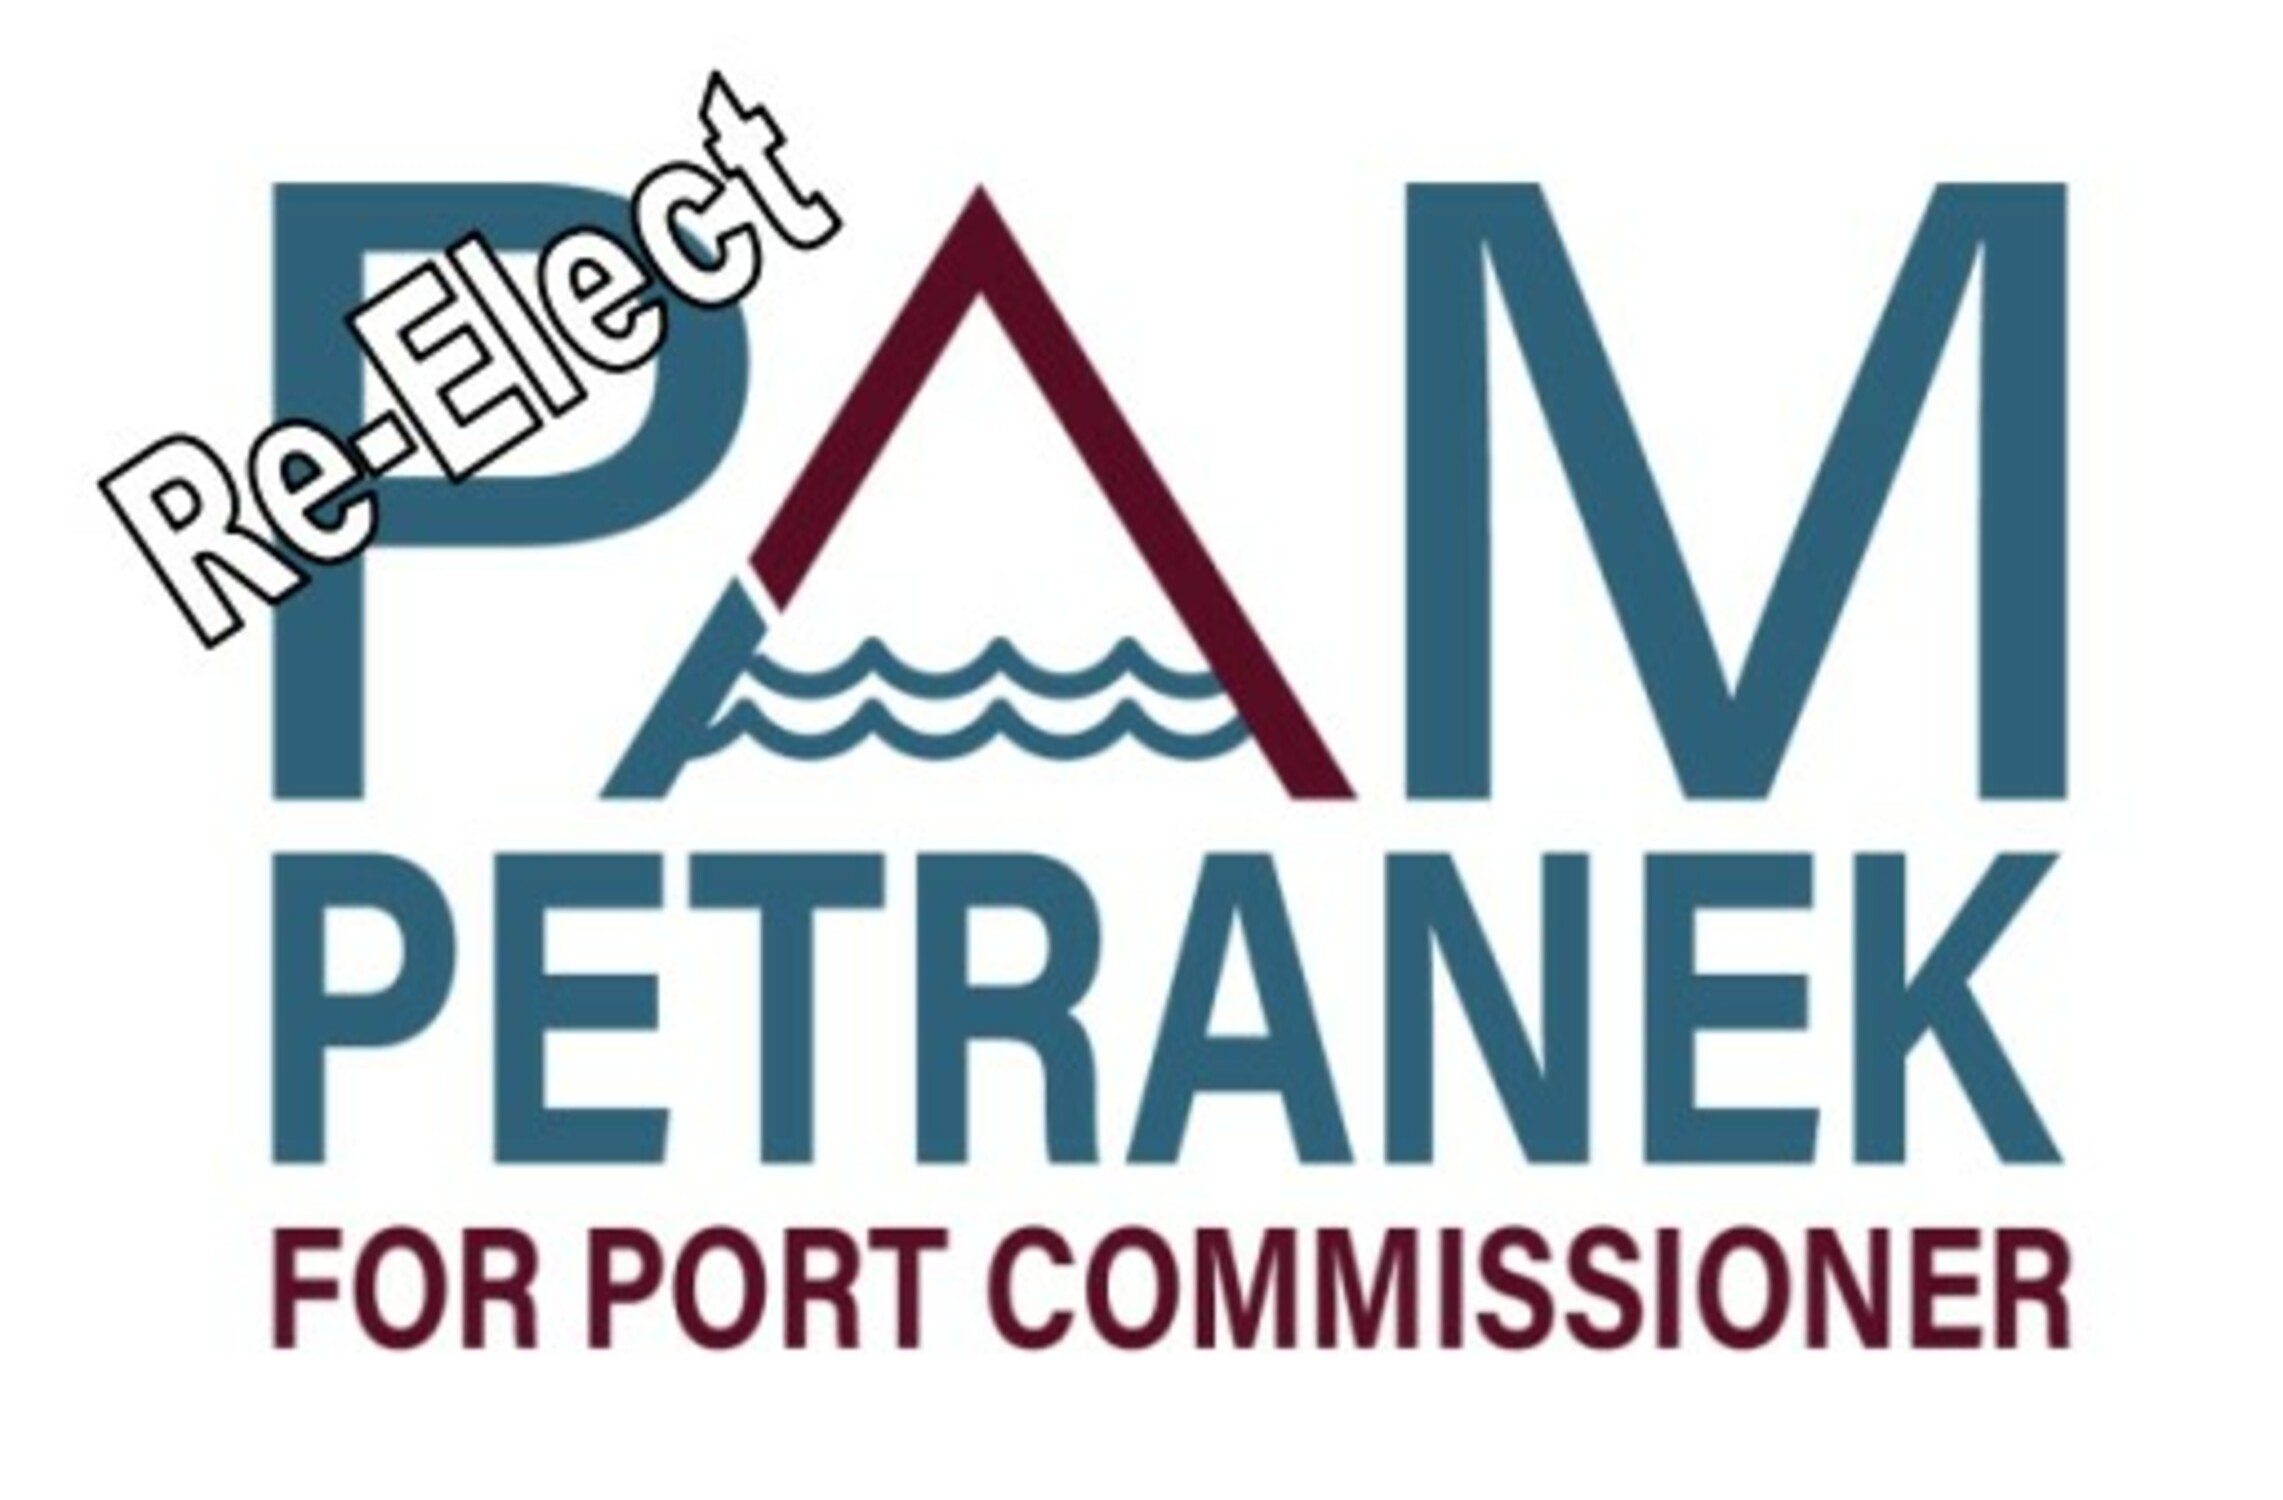 Pam Petranek for Port Commissioner